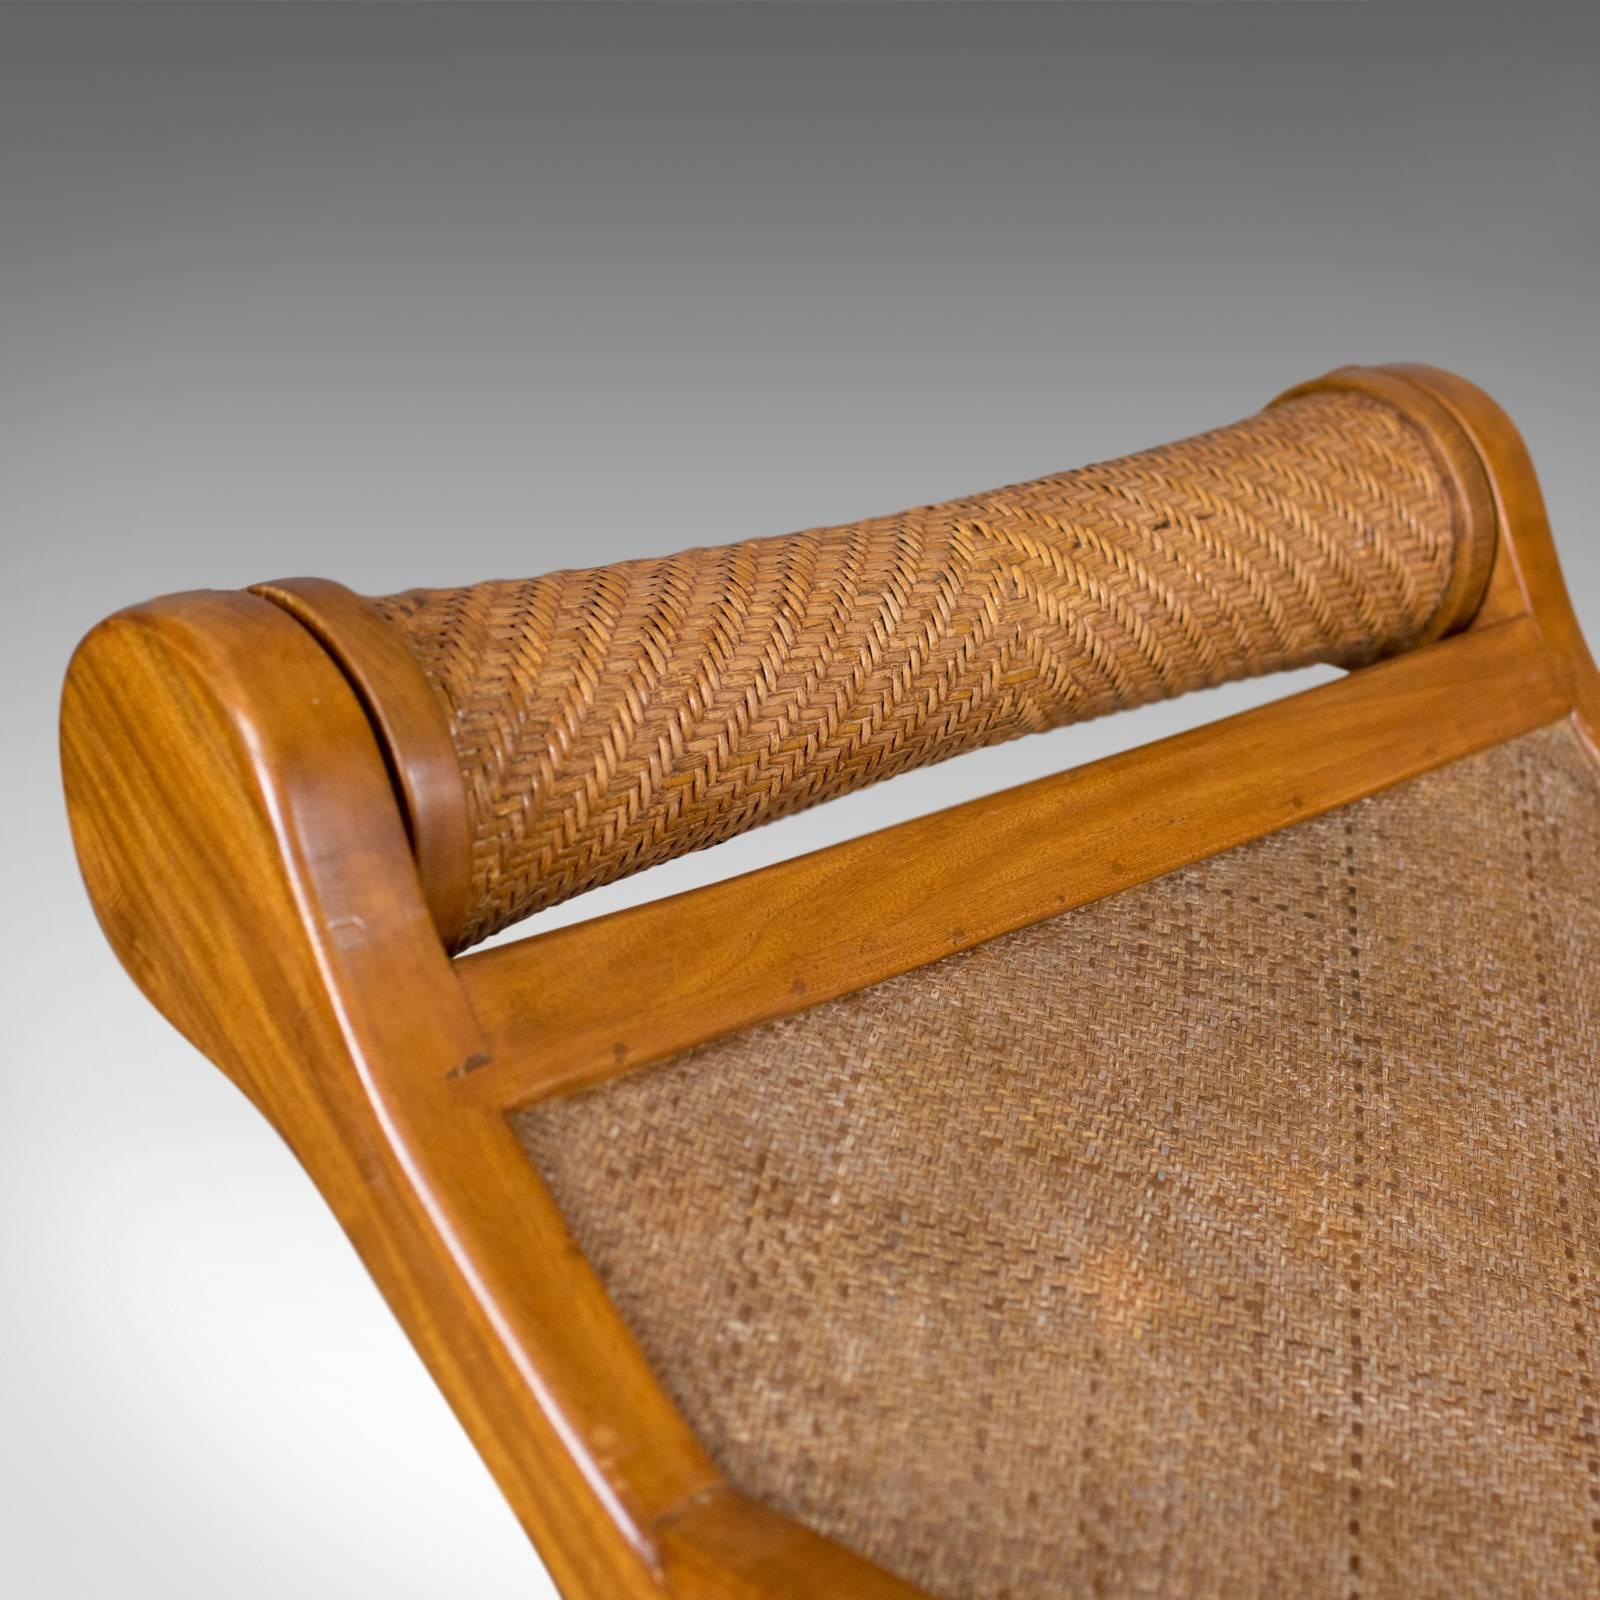 Cane Vintage Plantation Chair, Hardwood Steamer, Recliner, Mid-Century Modern